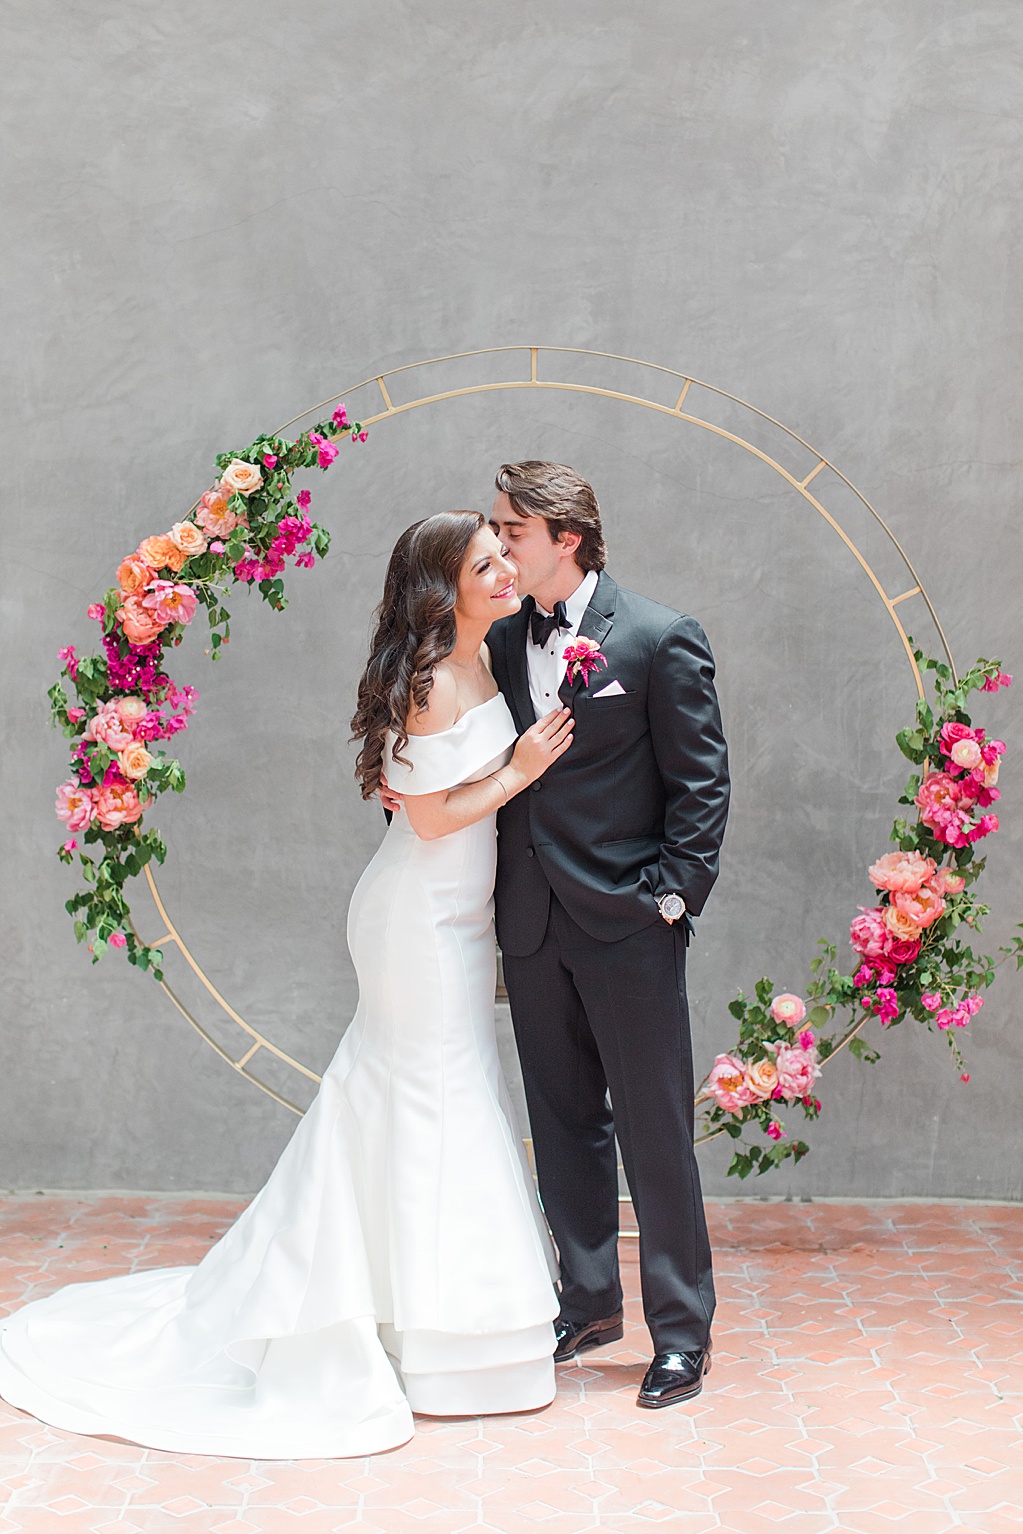 A Summer Wedding at Hotel Emma in San Antonio featuring hot pink bougainvillea florals 0051